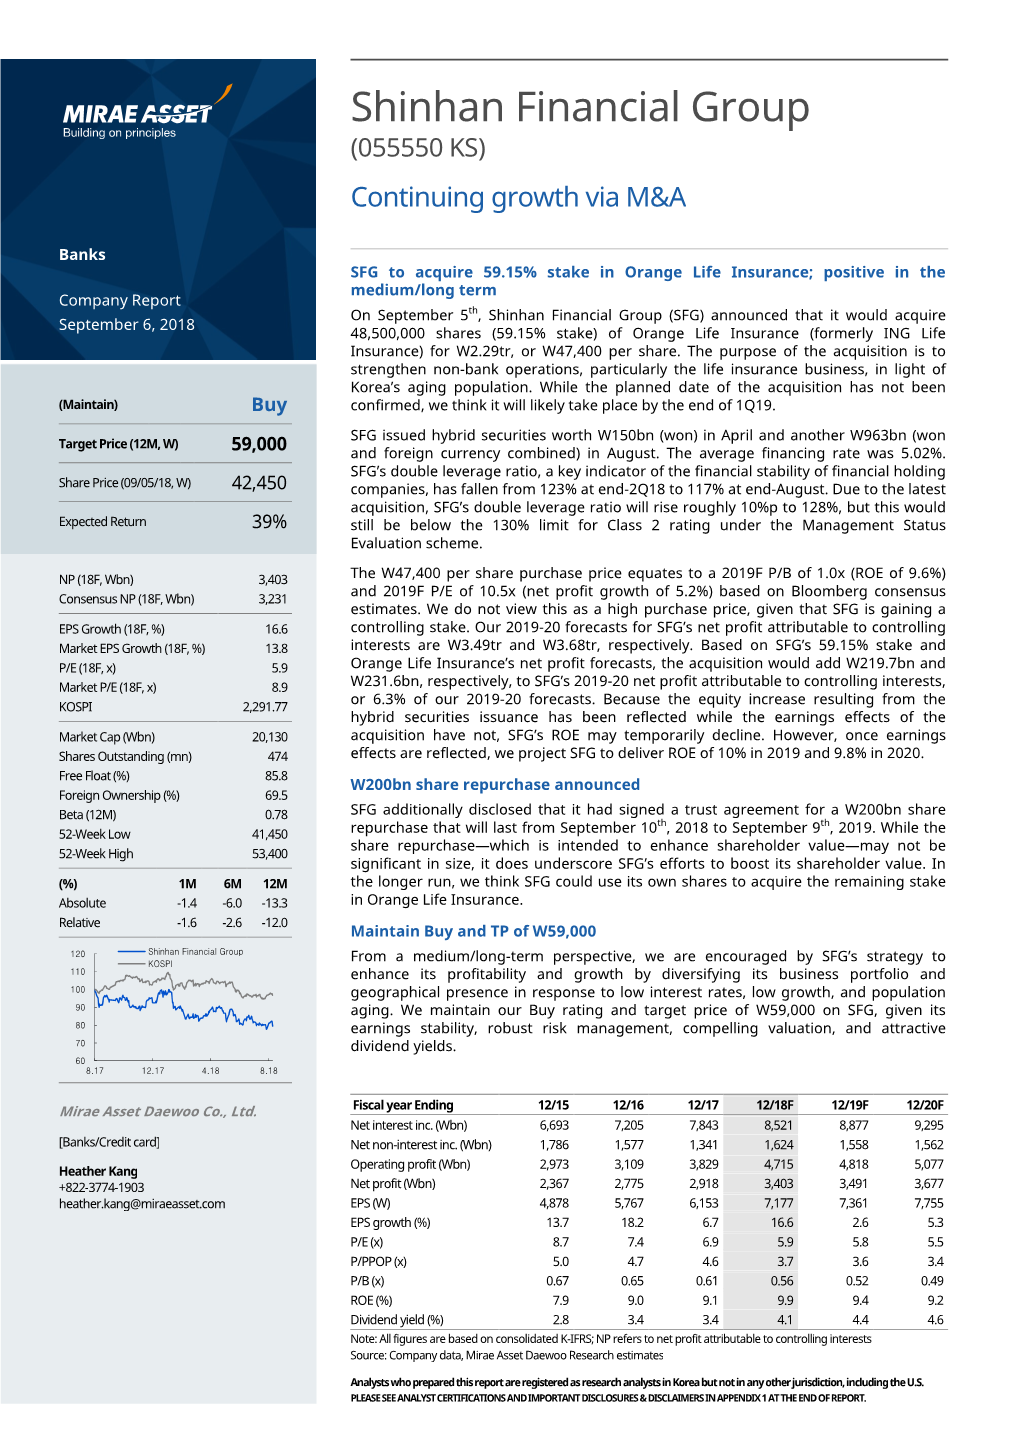 Shinhan Financial Group (055550 KS ) Continuing Growth Via M&A